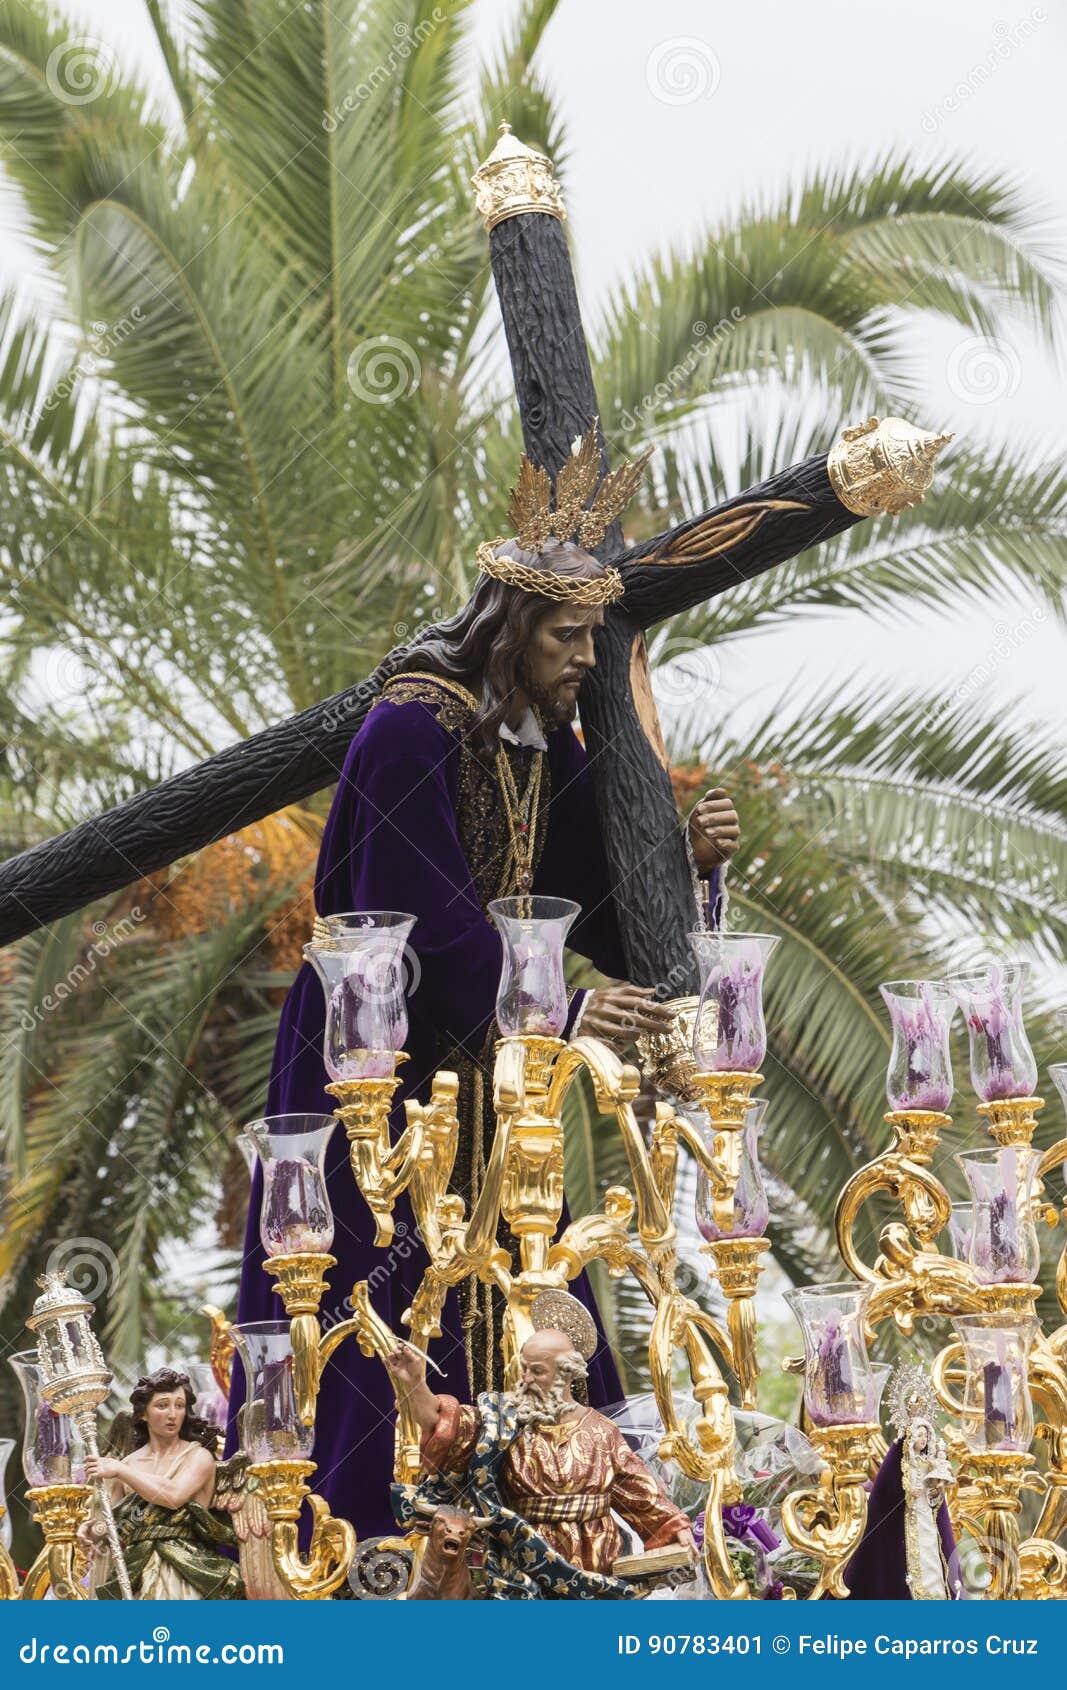 jesus of nazareth carrying wooden cross, throne more popular in